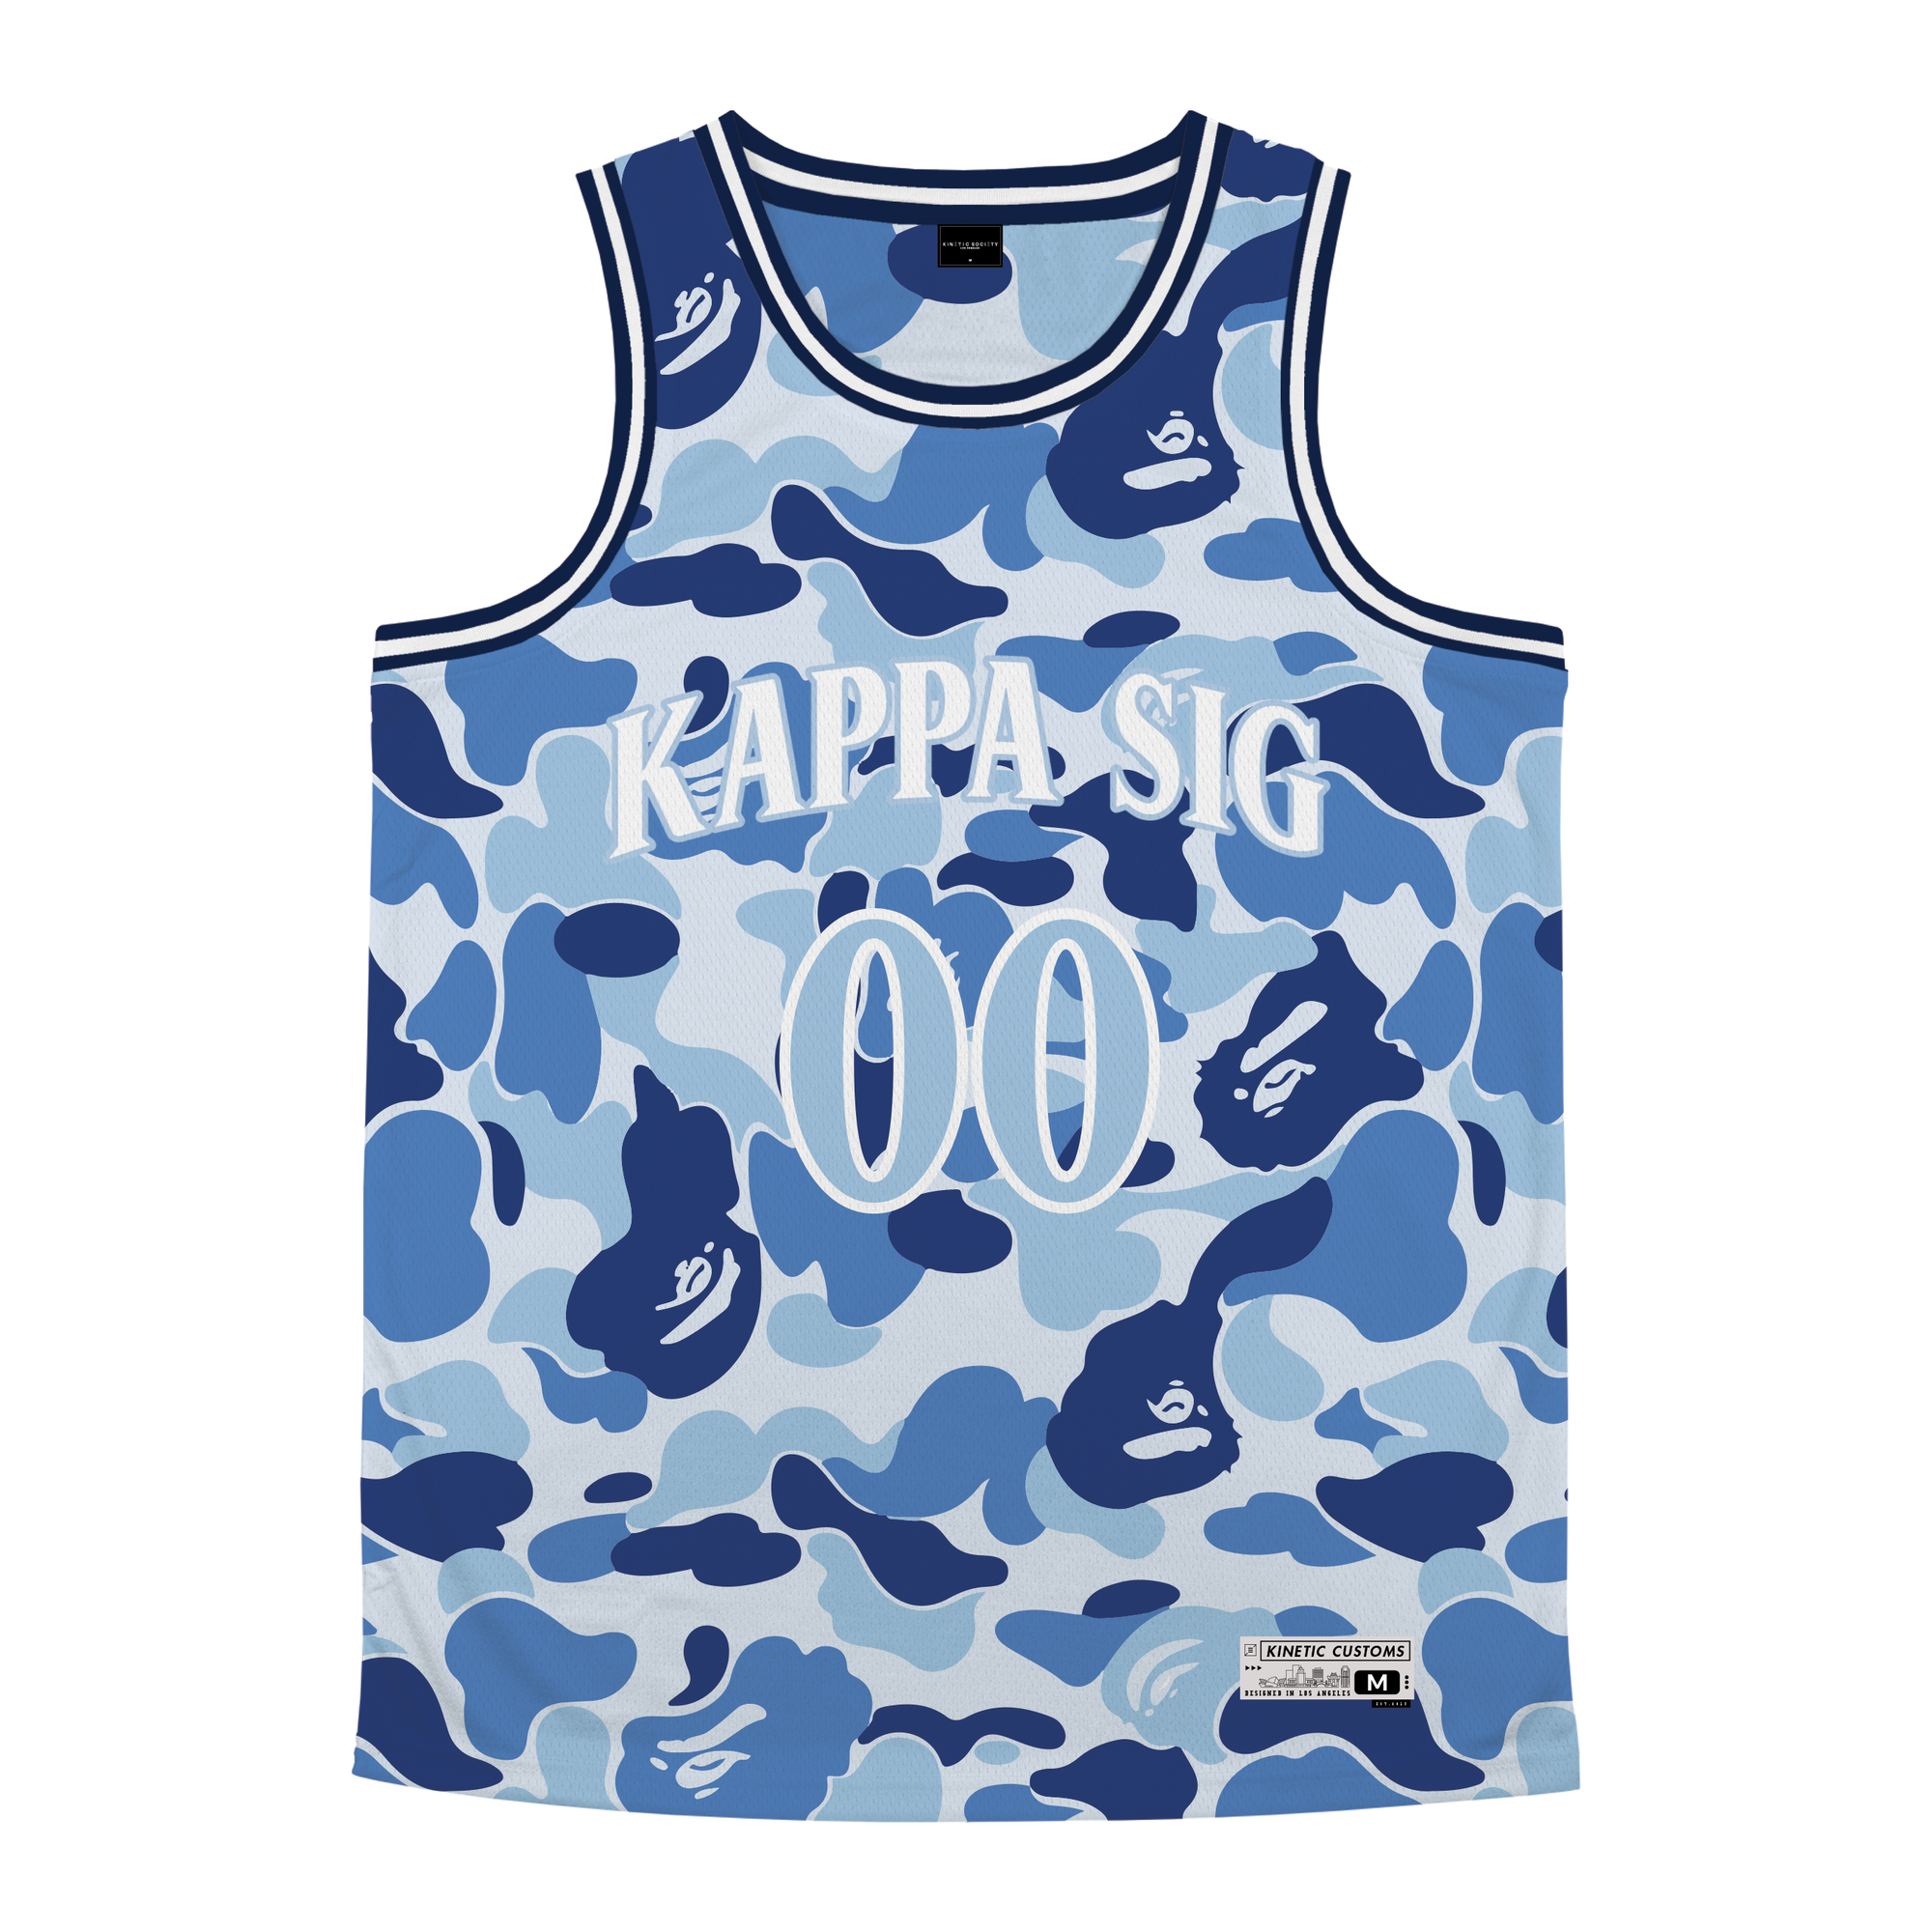 Kappa Sigma - Blue Camo Basketball Jersey